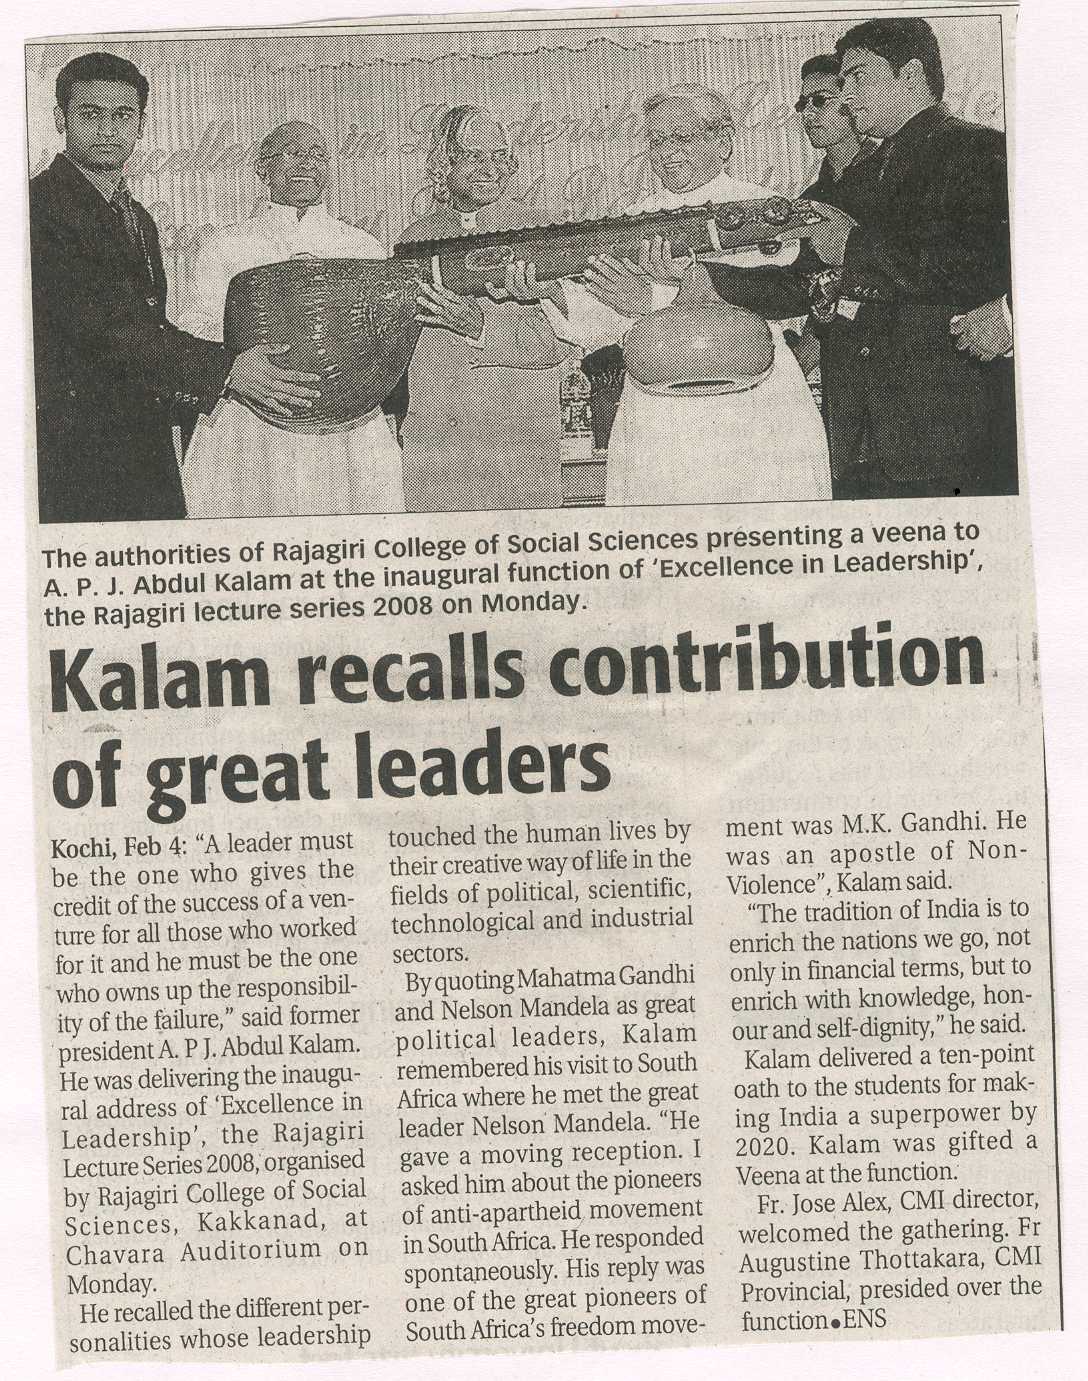 Dr. A.P.J Abdul Kalam's visit